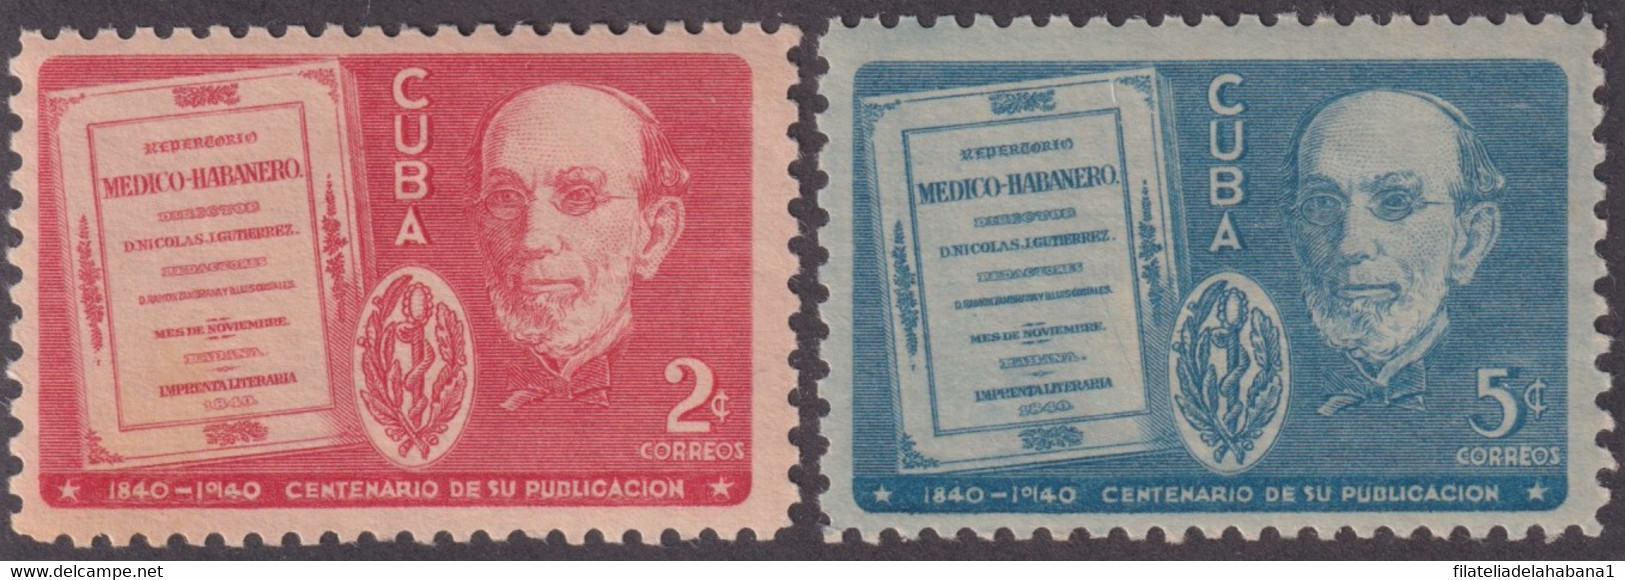 1940-339 CUBA REPUBLICA 1940 MNH CENT REPERTORIO MEDICO HABANERO GUTIERREZ - Neufs